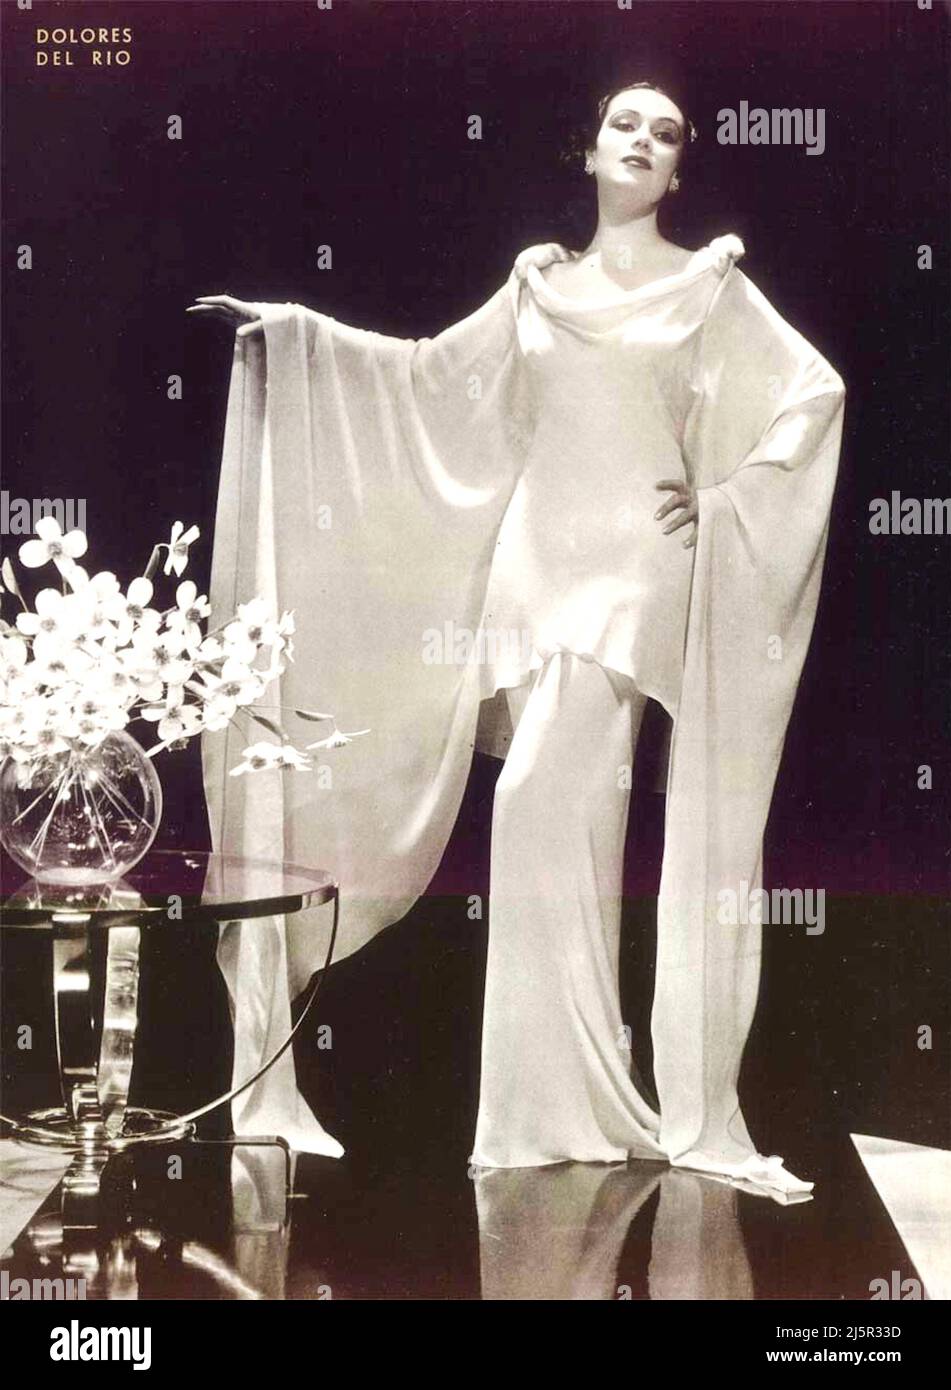 Dolores del Rio - Publicity photograph for an Argentine magazine - 1935 Stock Photo